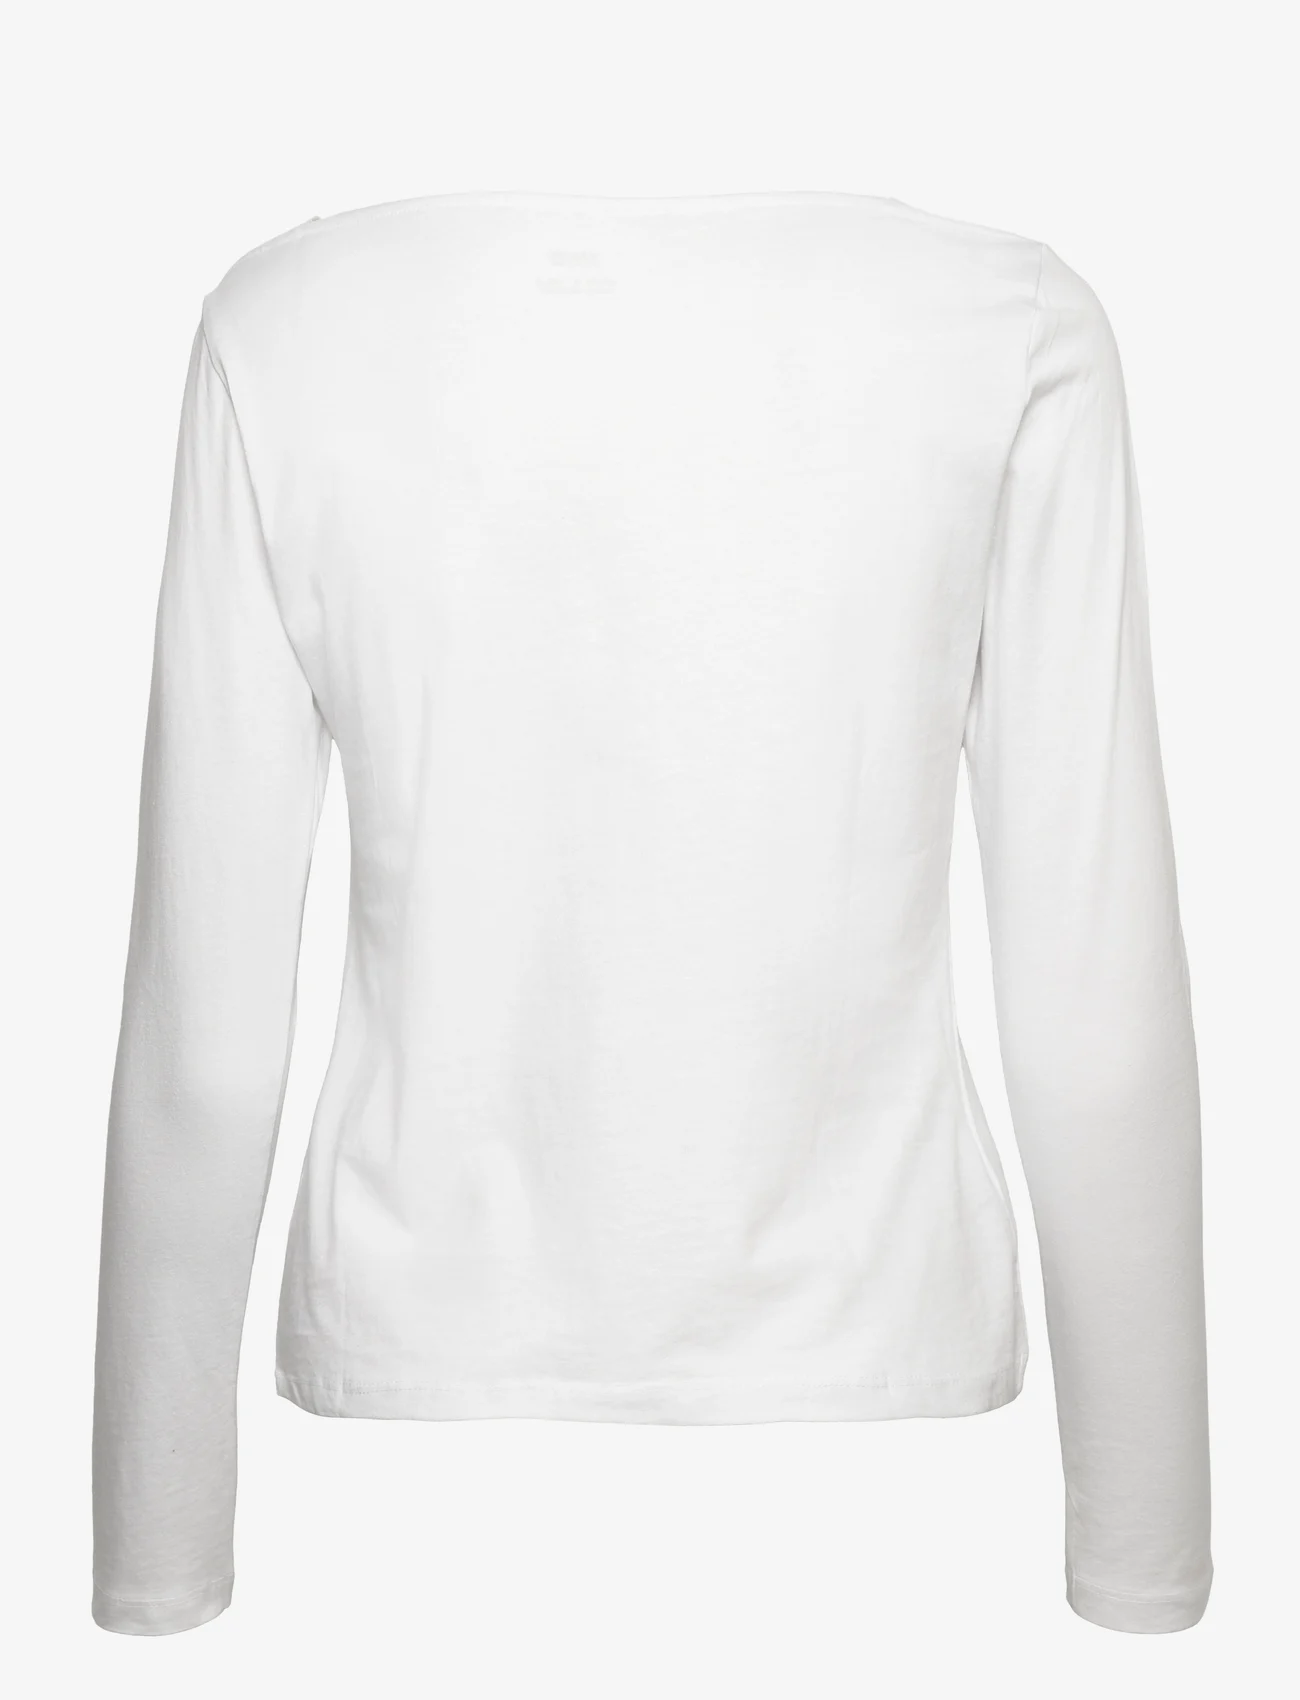 Mango - Cotton boat neck t-shirt - lägsta priserna - white - 1